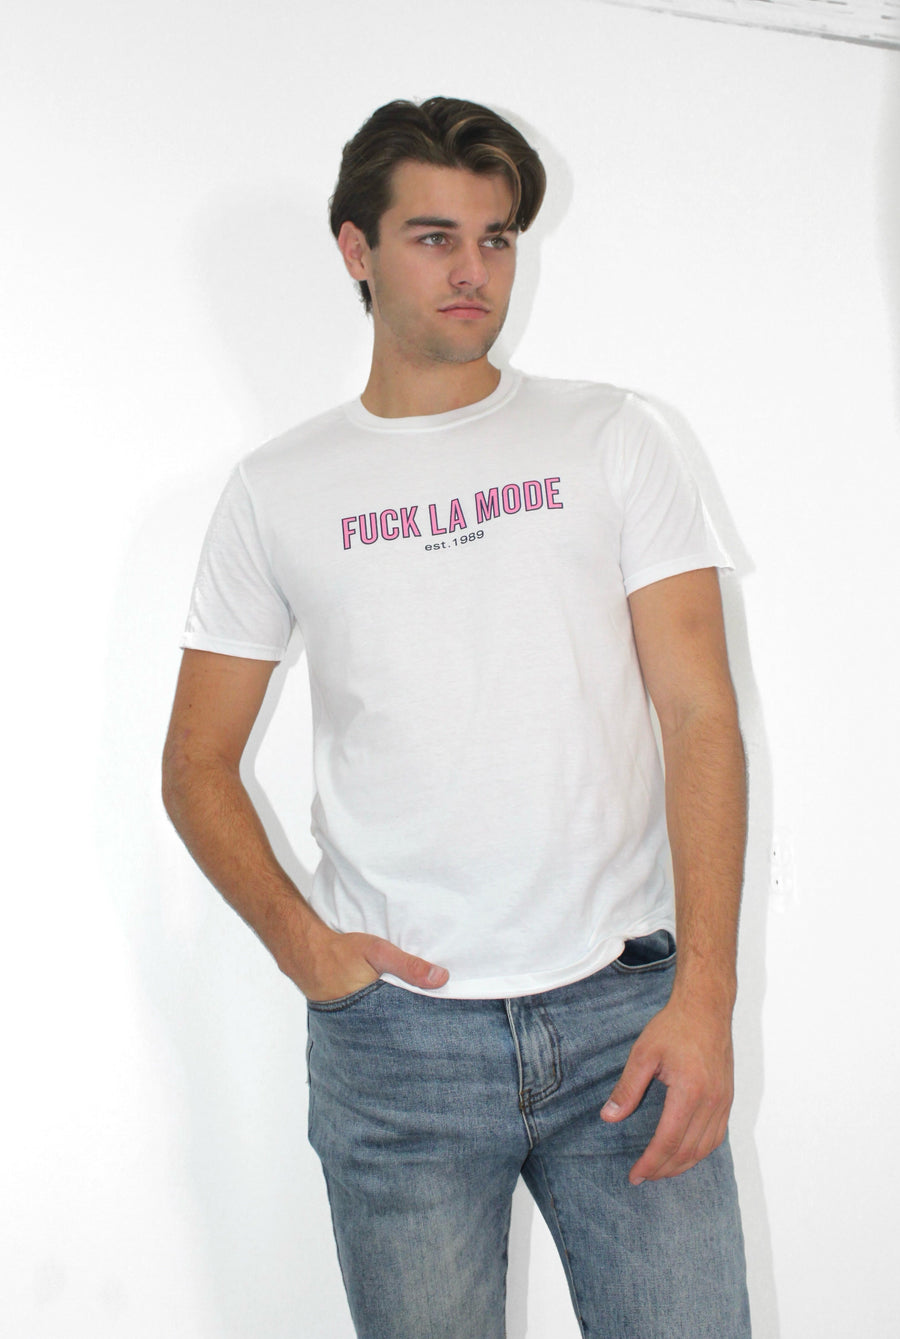 Unisex - Sports Retro T-shirt - Pink